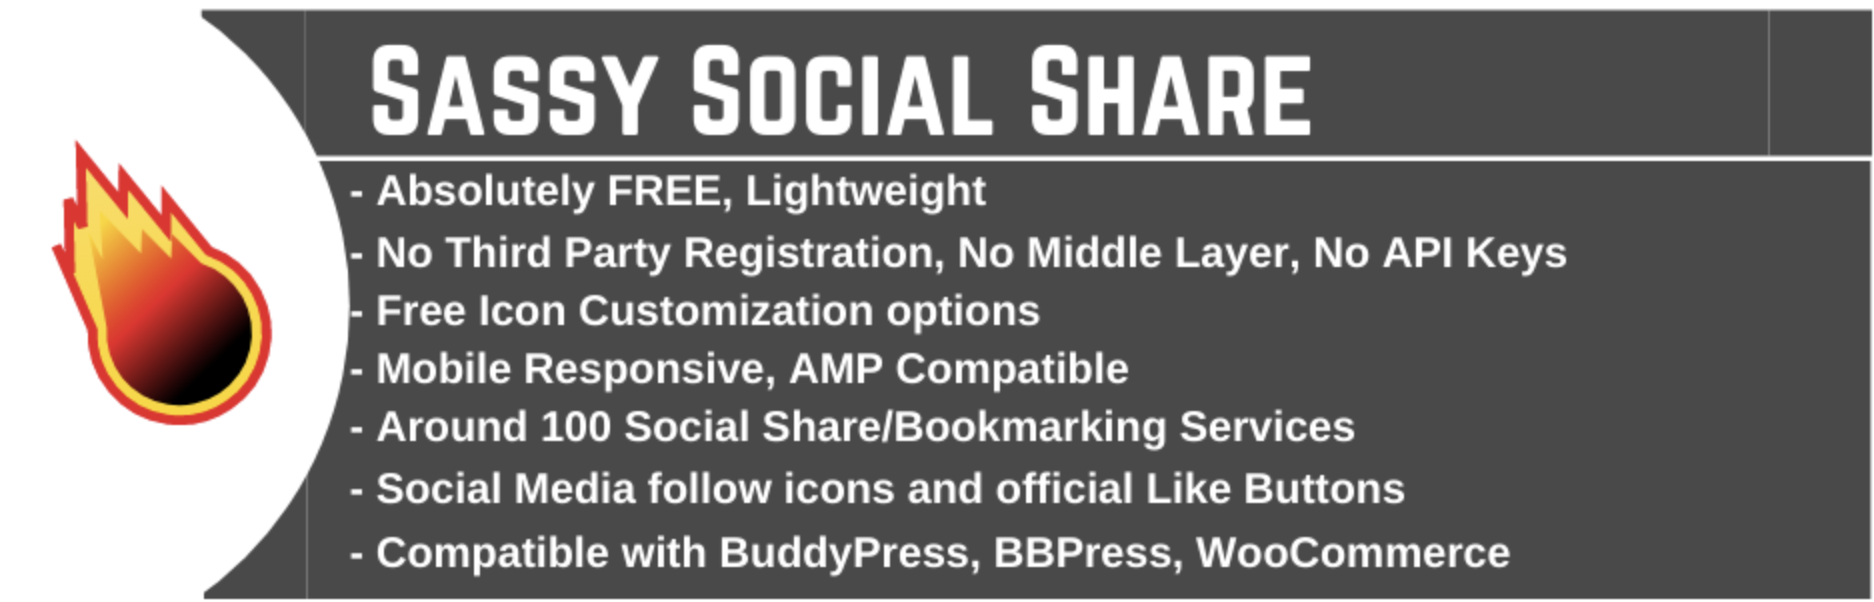 Sassy Social Share Homepage